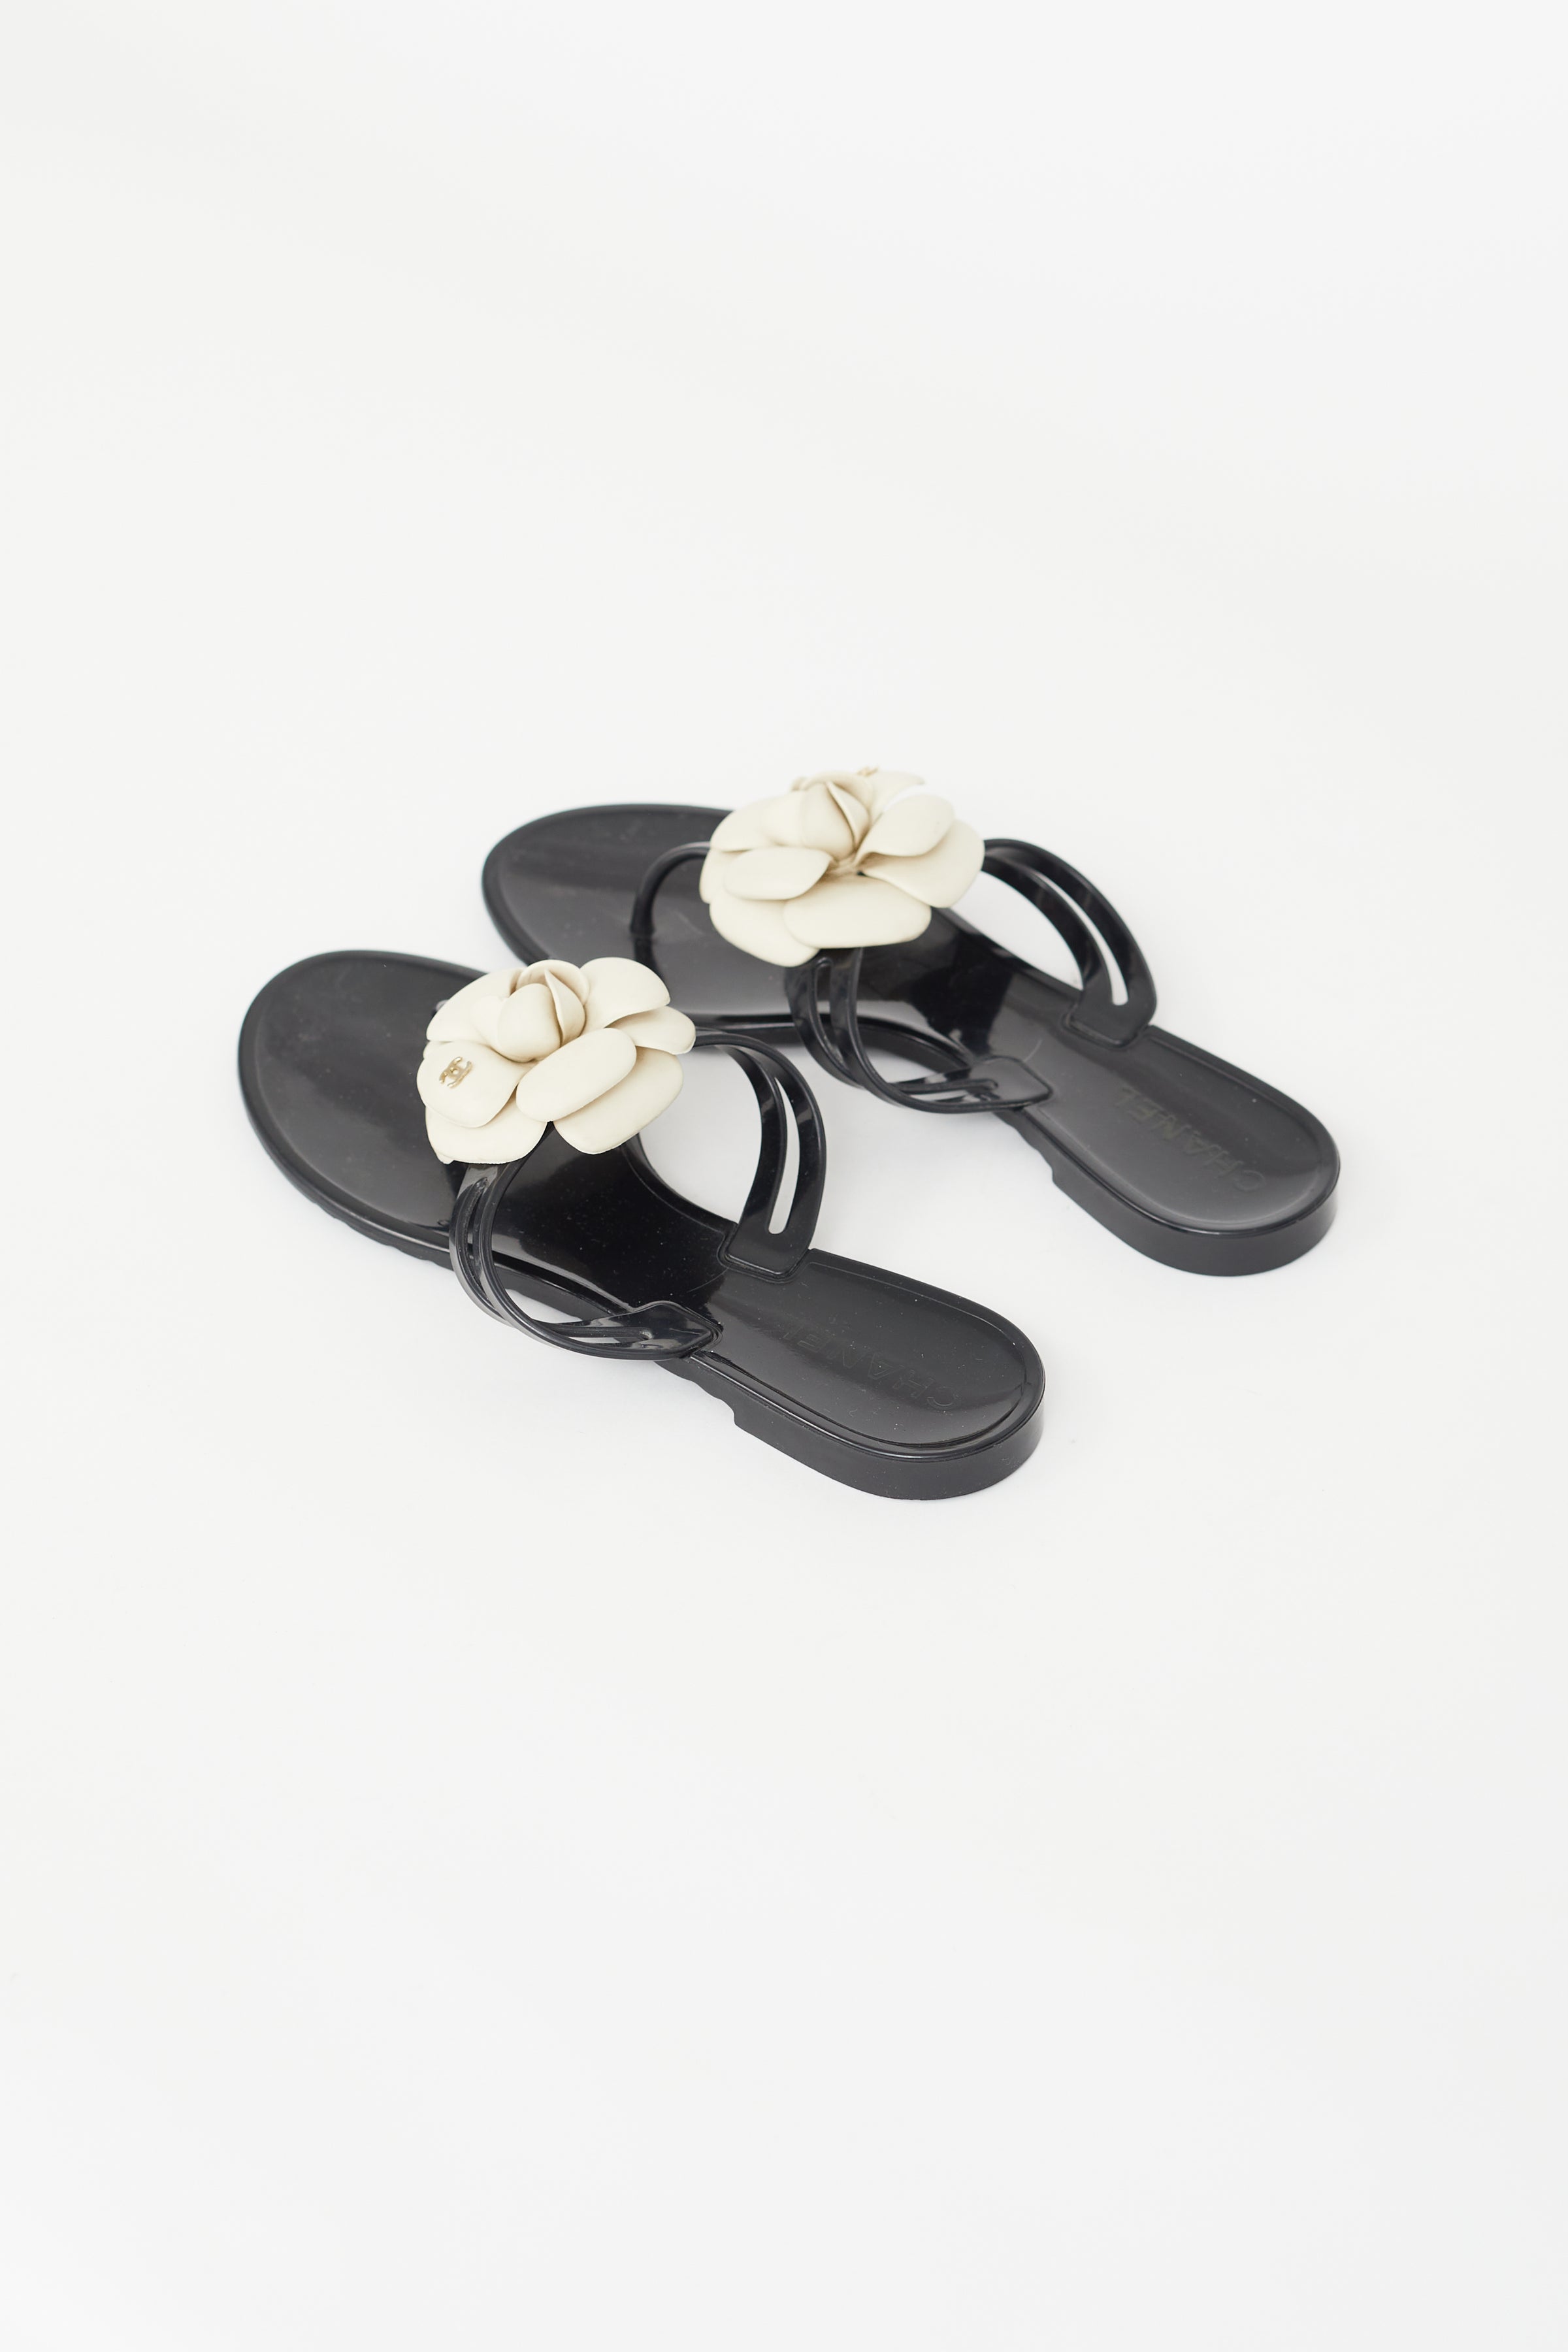 CHANEL Camellia Flip-Flops Tong Sandals Black x Cream CC mark Women size 38  US7